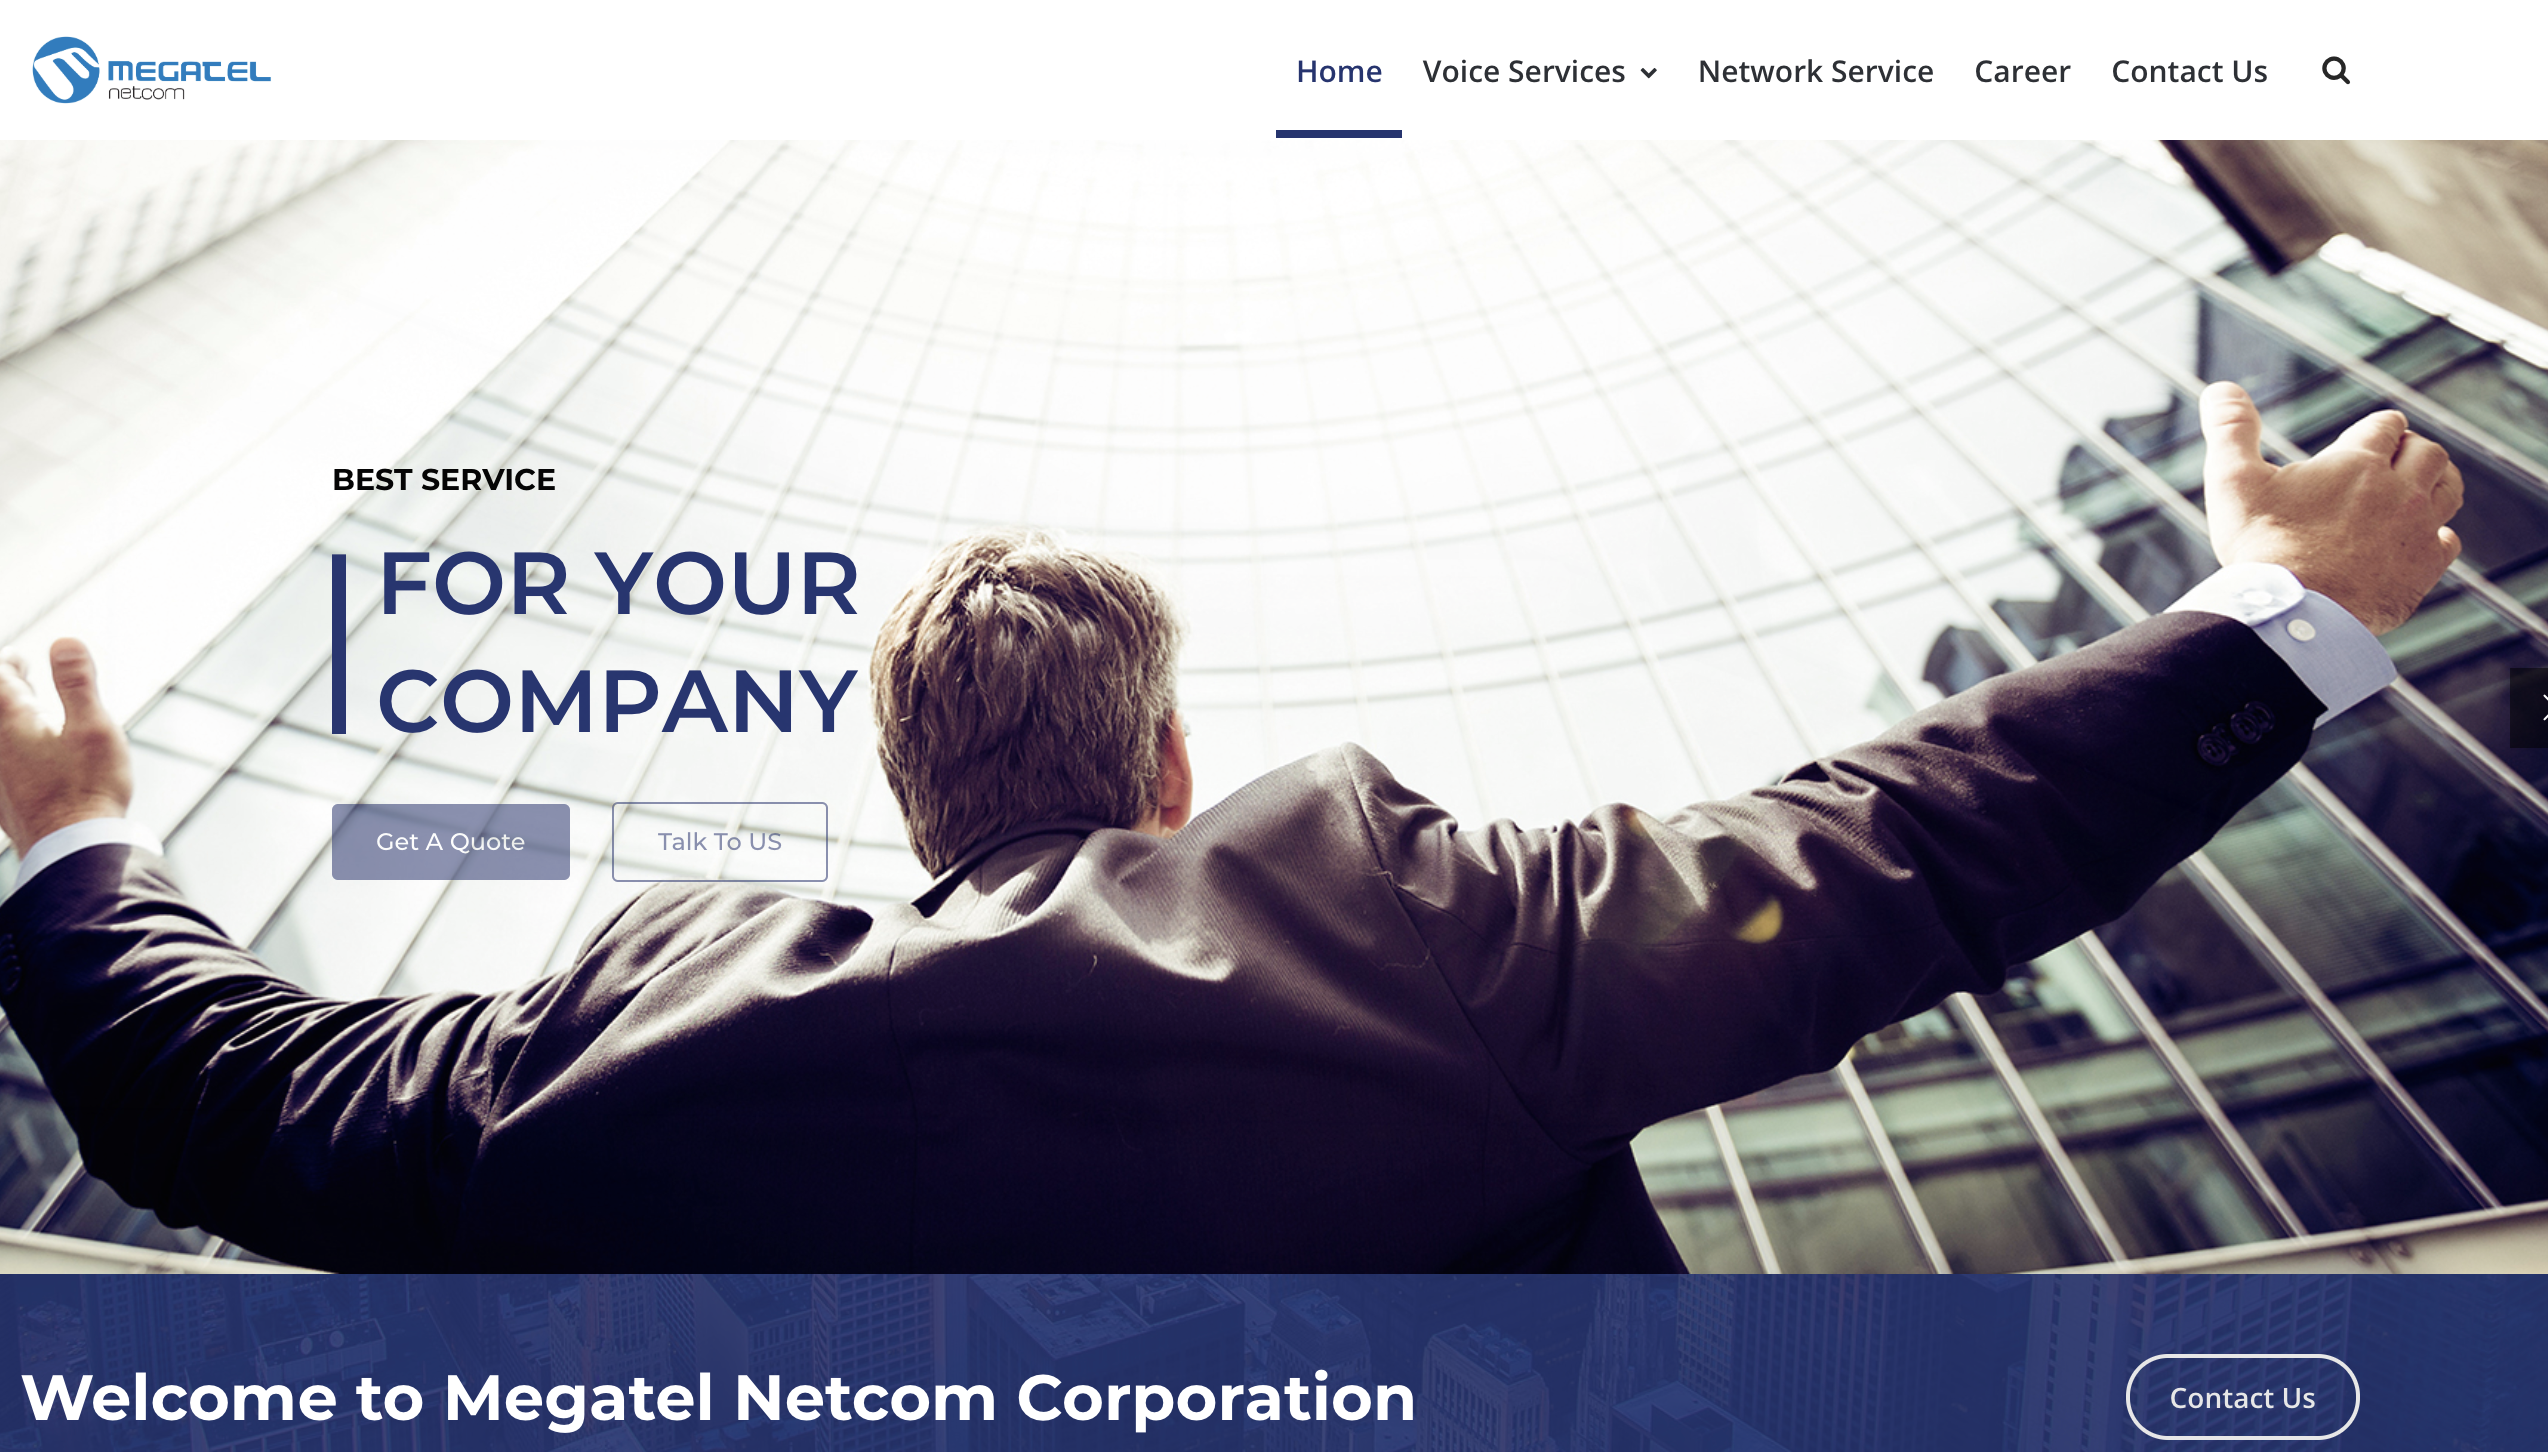 Megatel Netcom